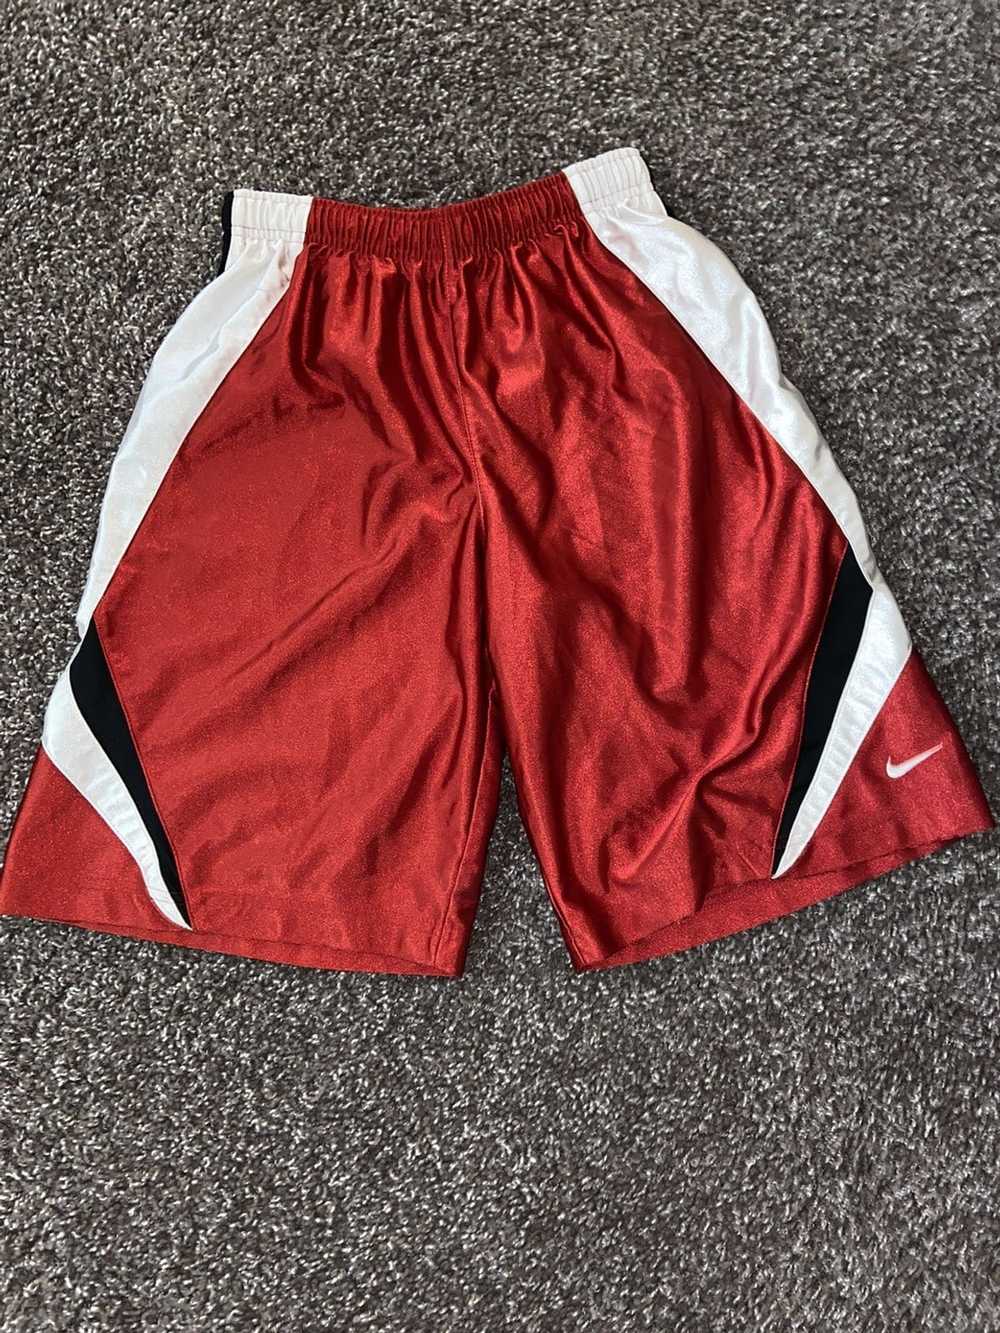 Nike Nike Vintage 90s Red Shorts - image 1